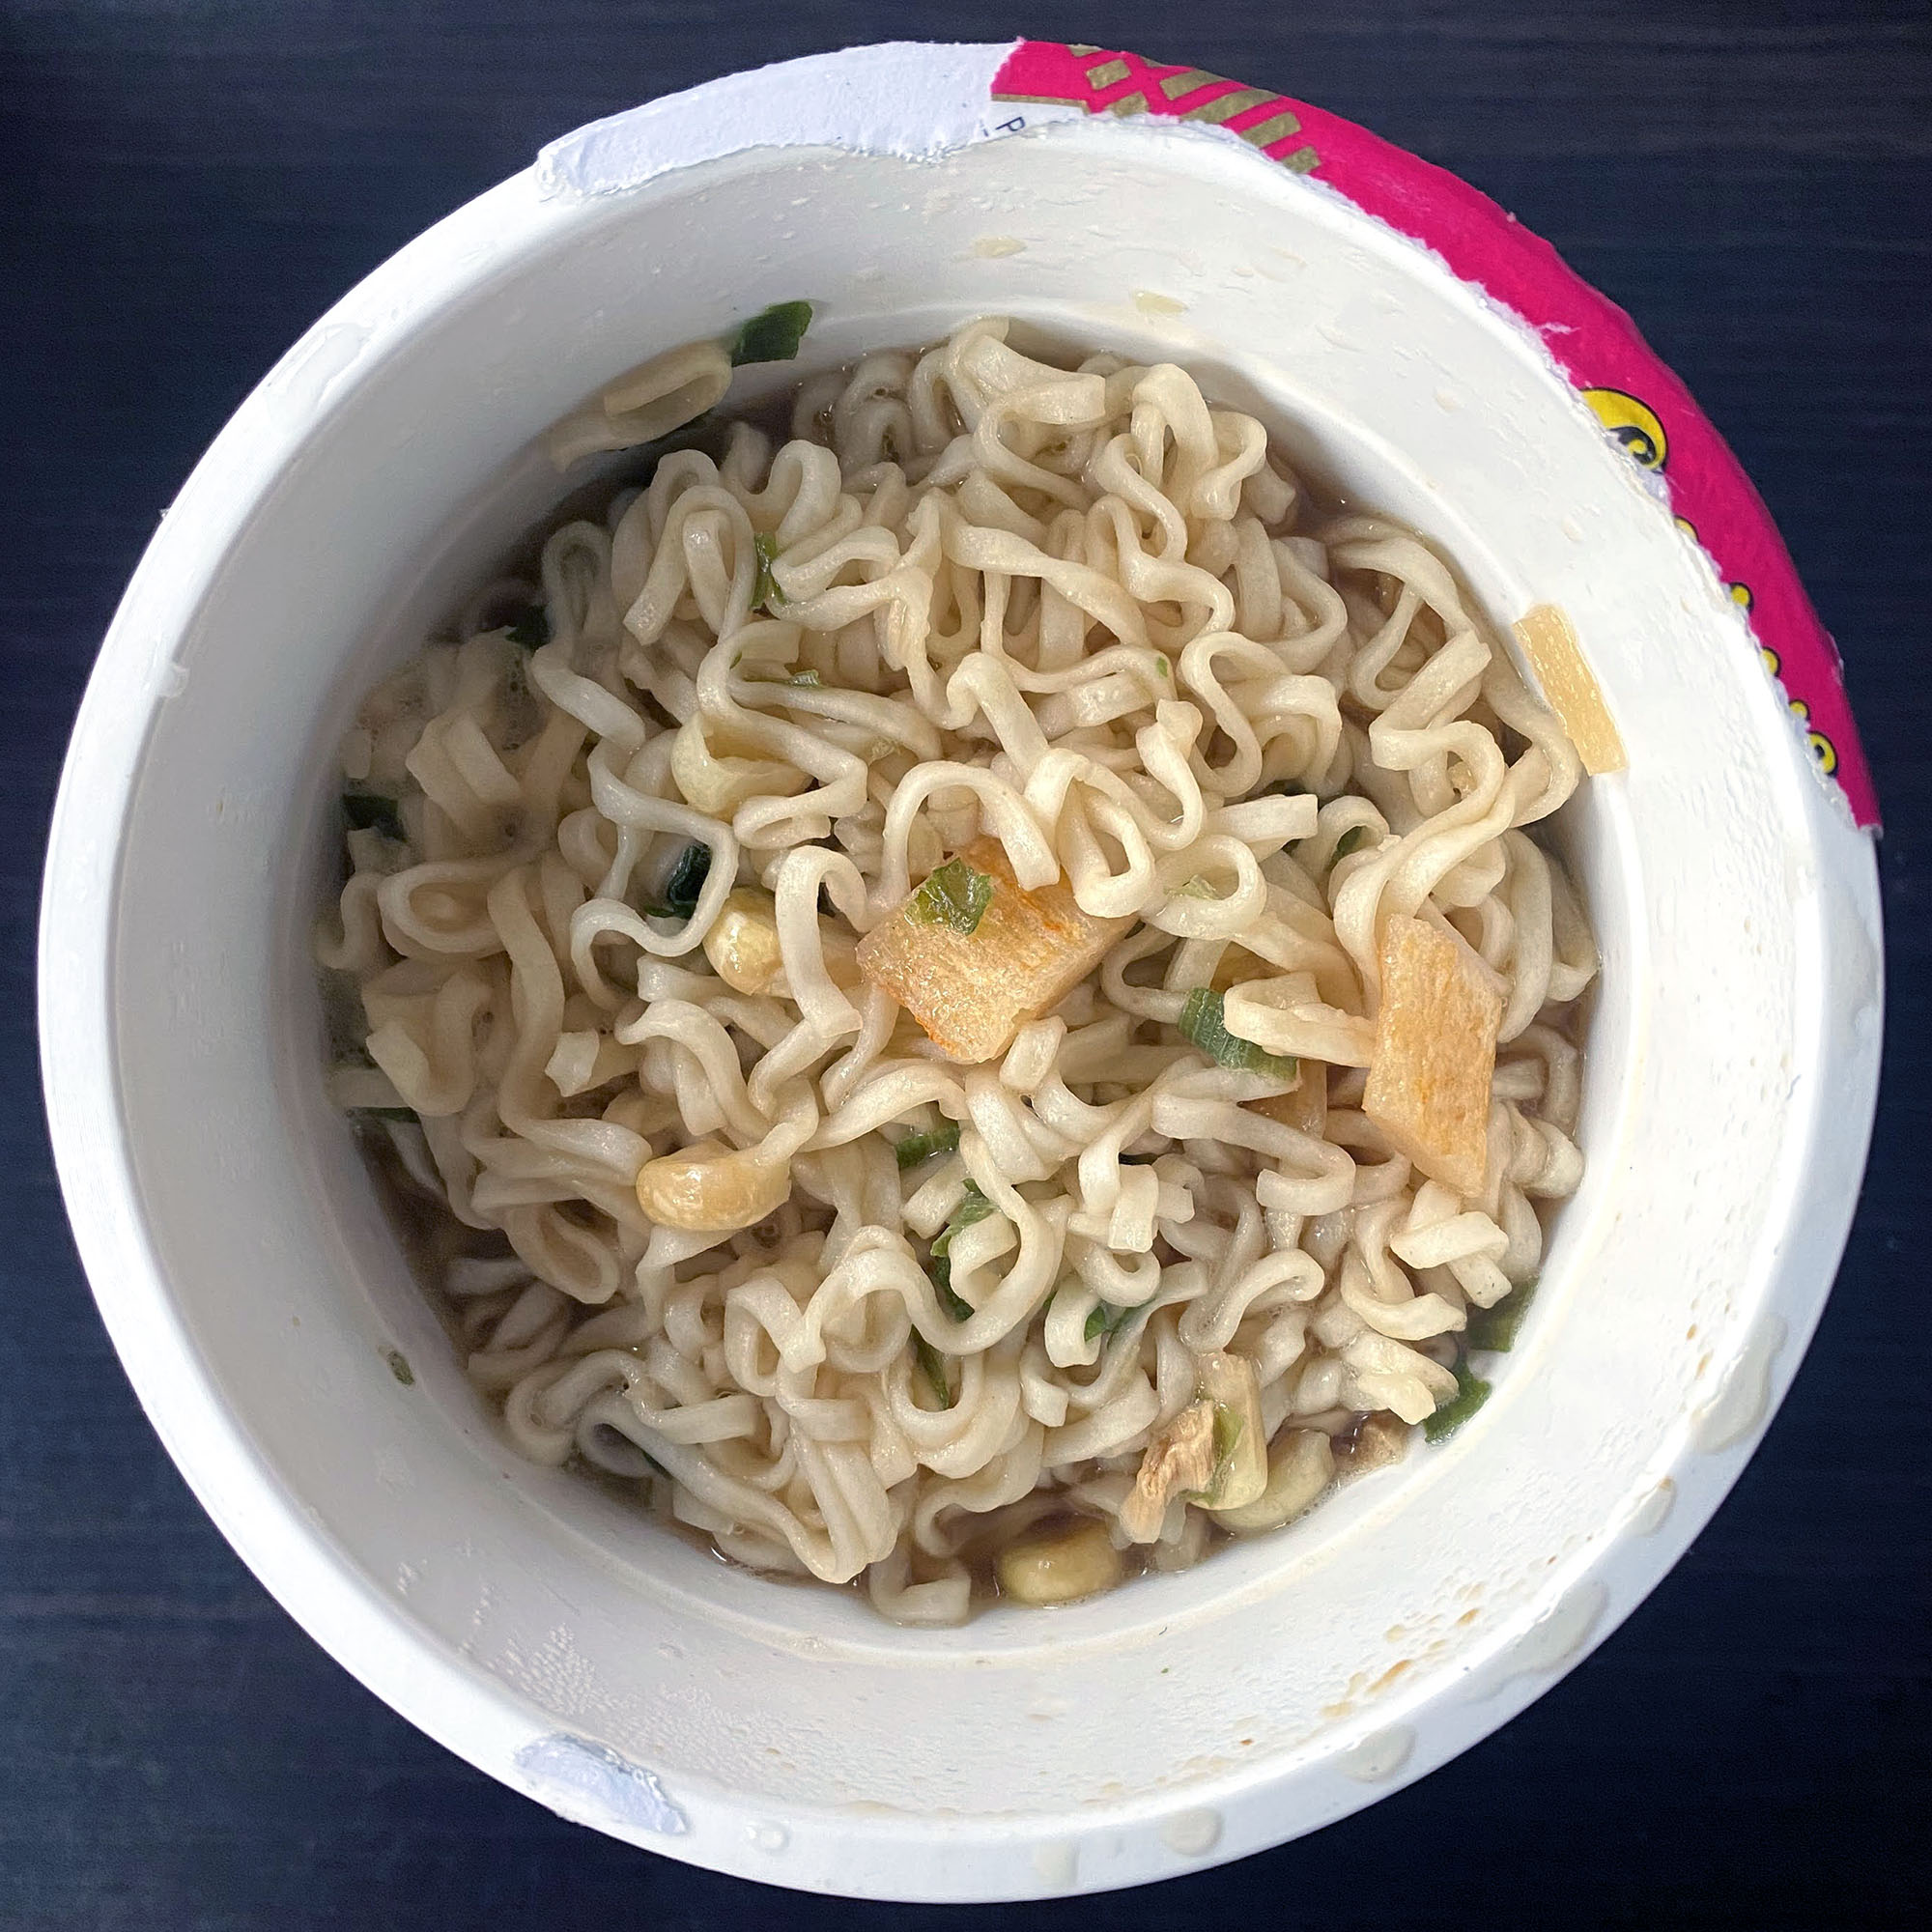 Nissin Cup Noodles Crab Flavor